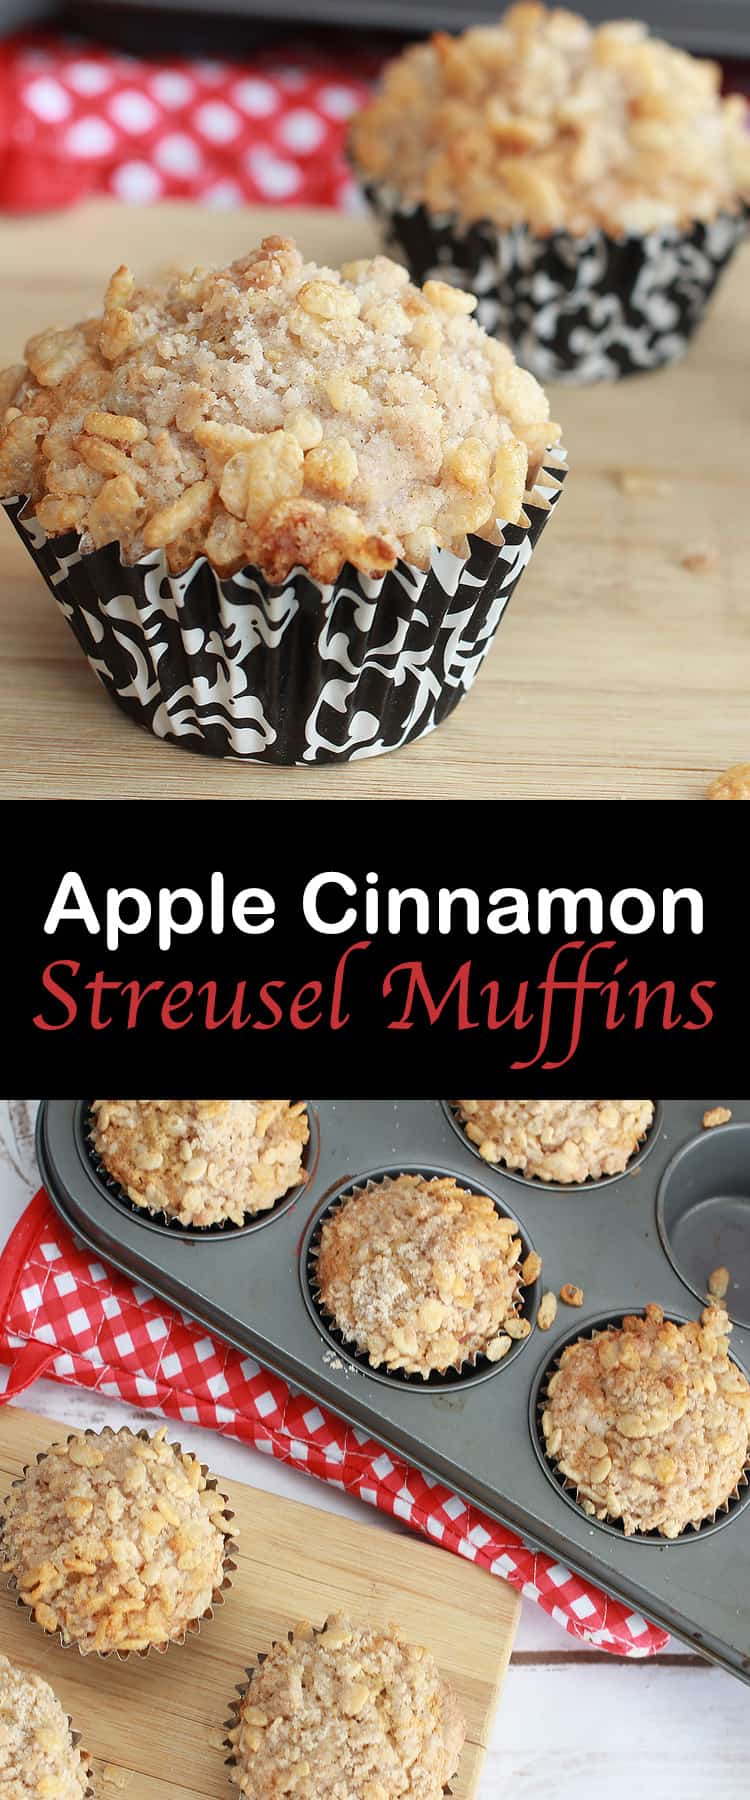 Apple Cinnamon Streusel Muffins Recipe